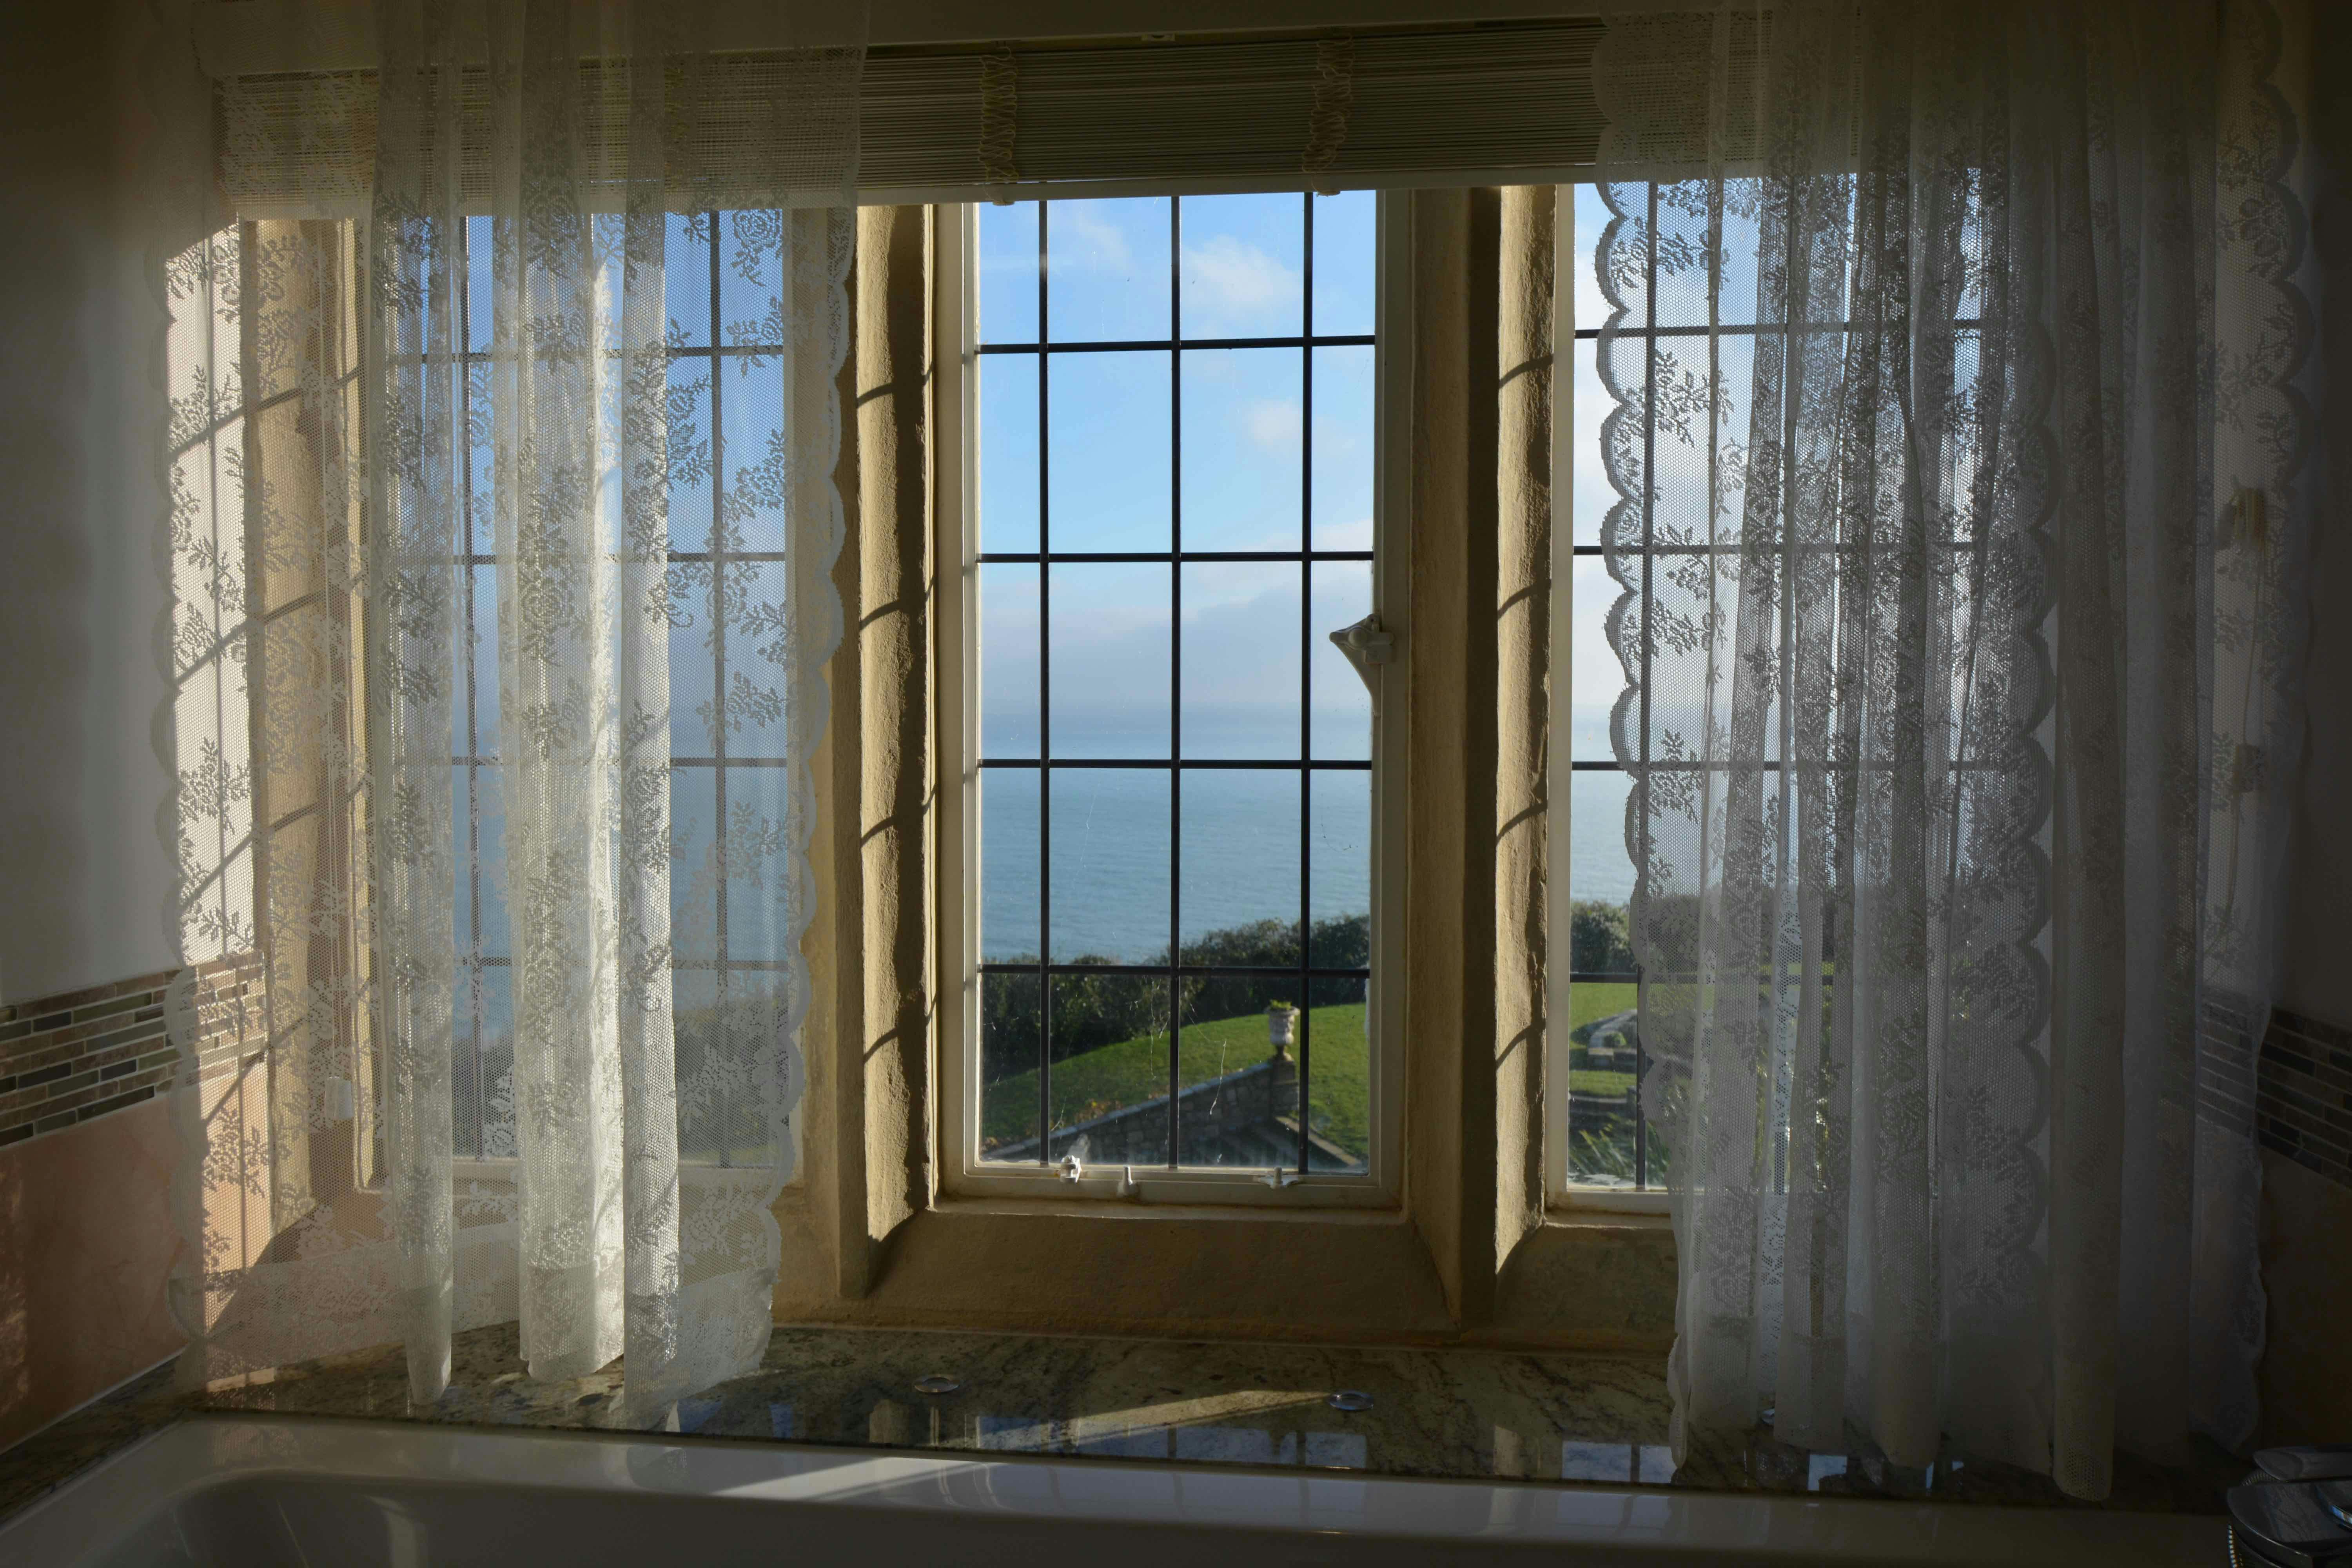 Haven Hall Hotel, Victoria & Albert room, view from window